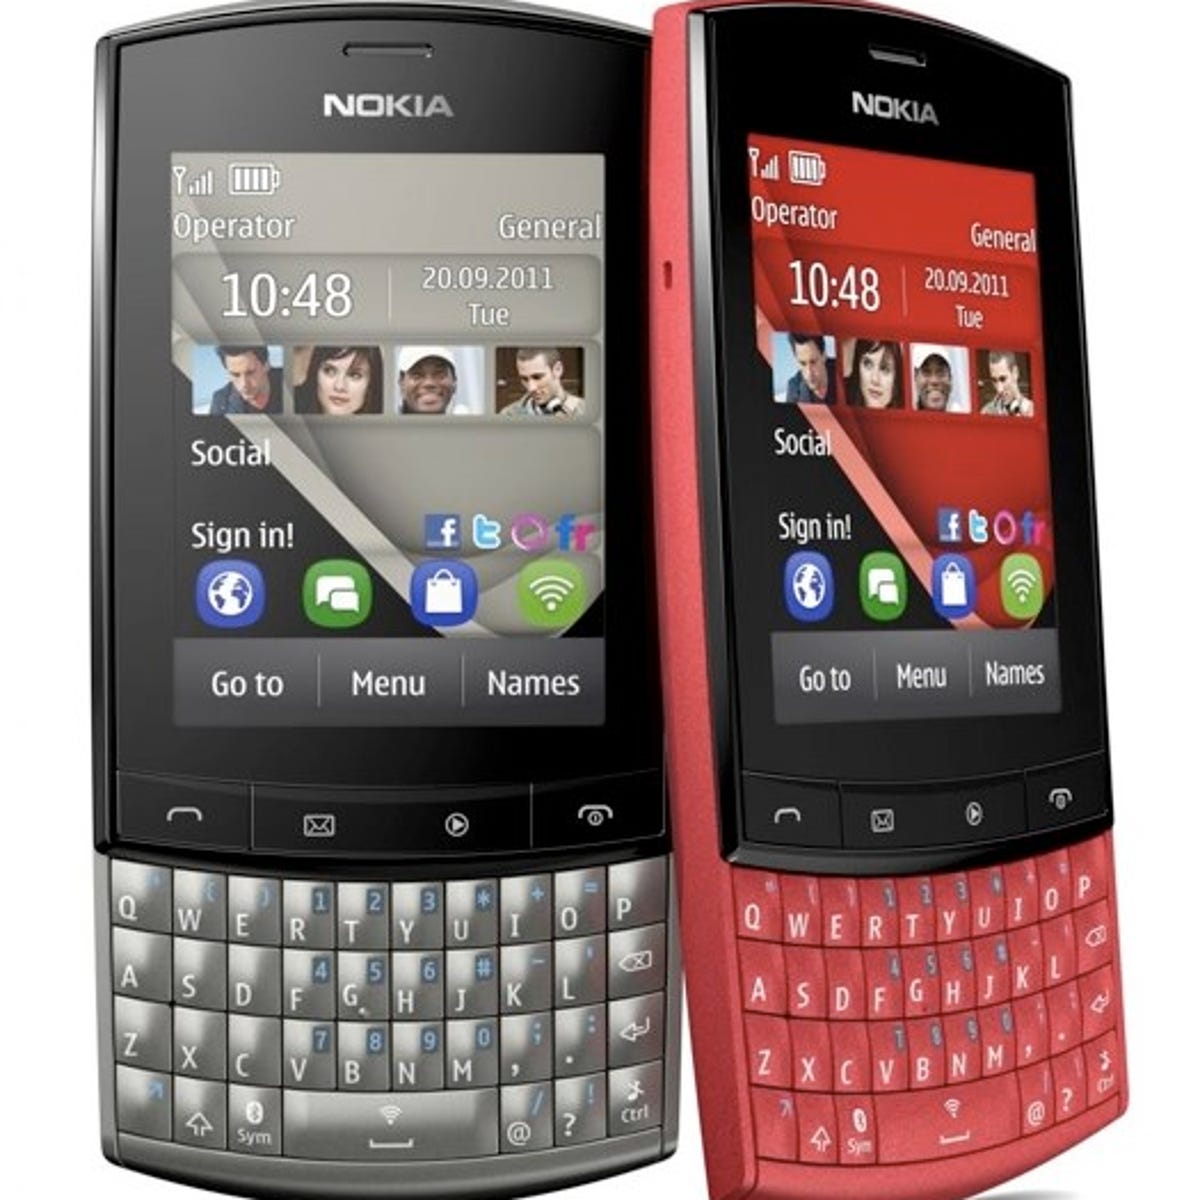 Картинка телефона нокиа. Nokia Asha 303. Nokia Asha 30. Nokia Asha 2006. Nokia Series 40.